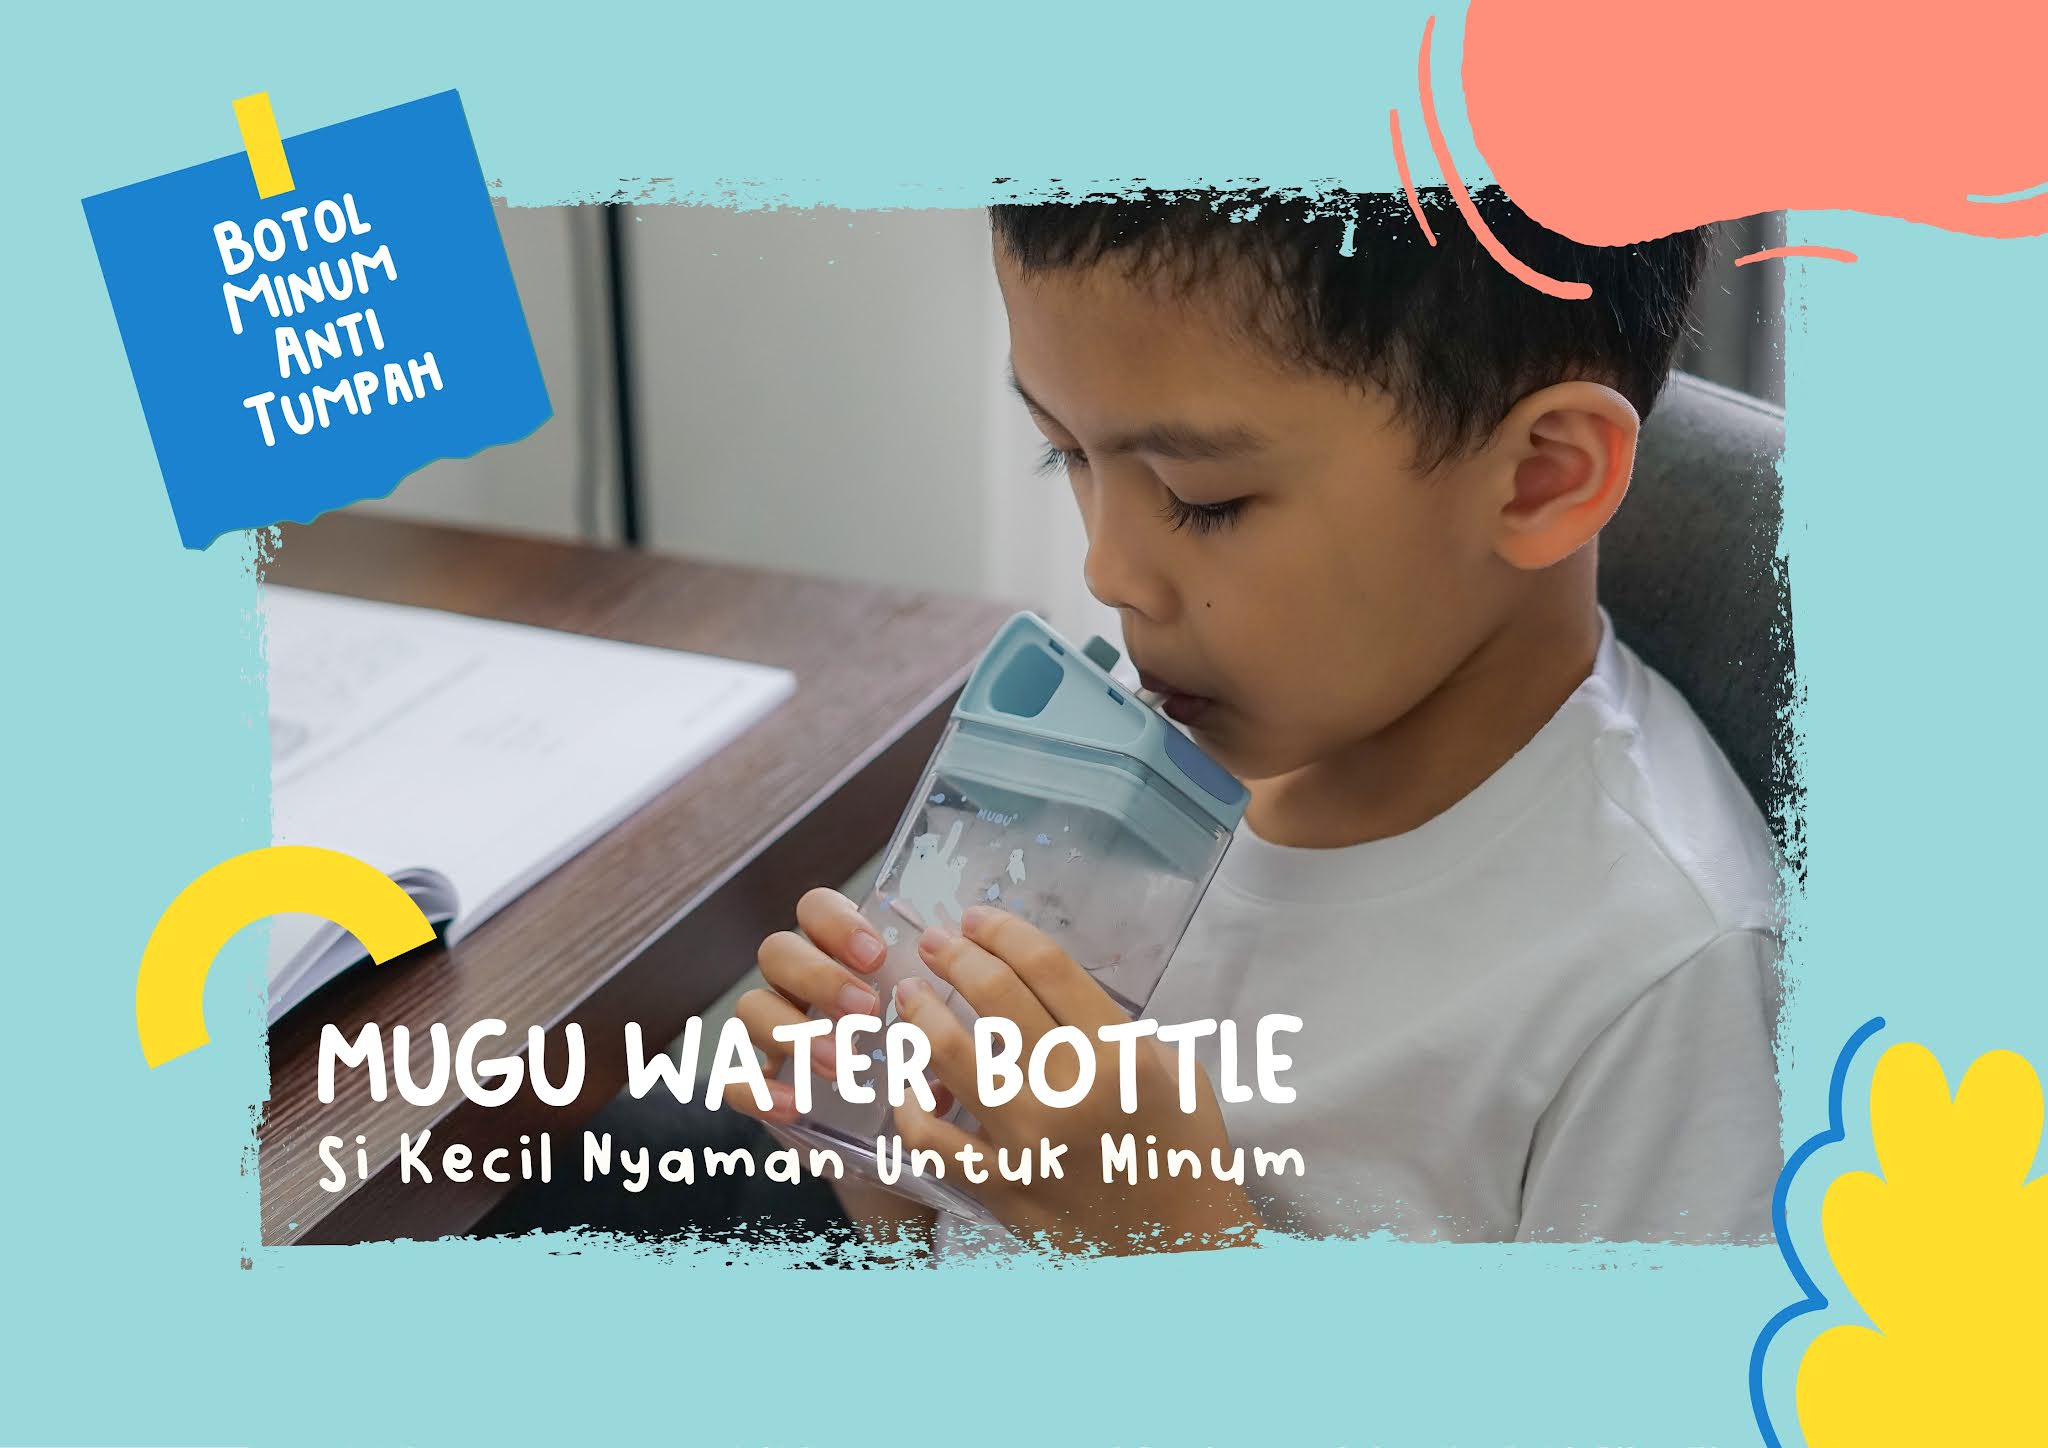 mugu water bottle